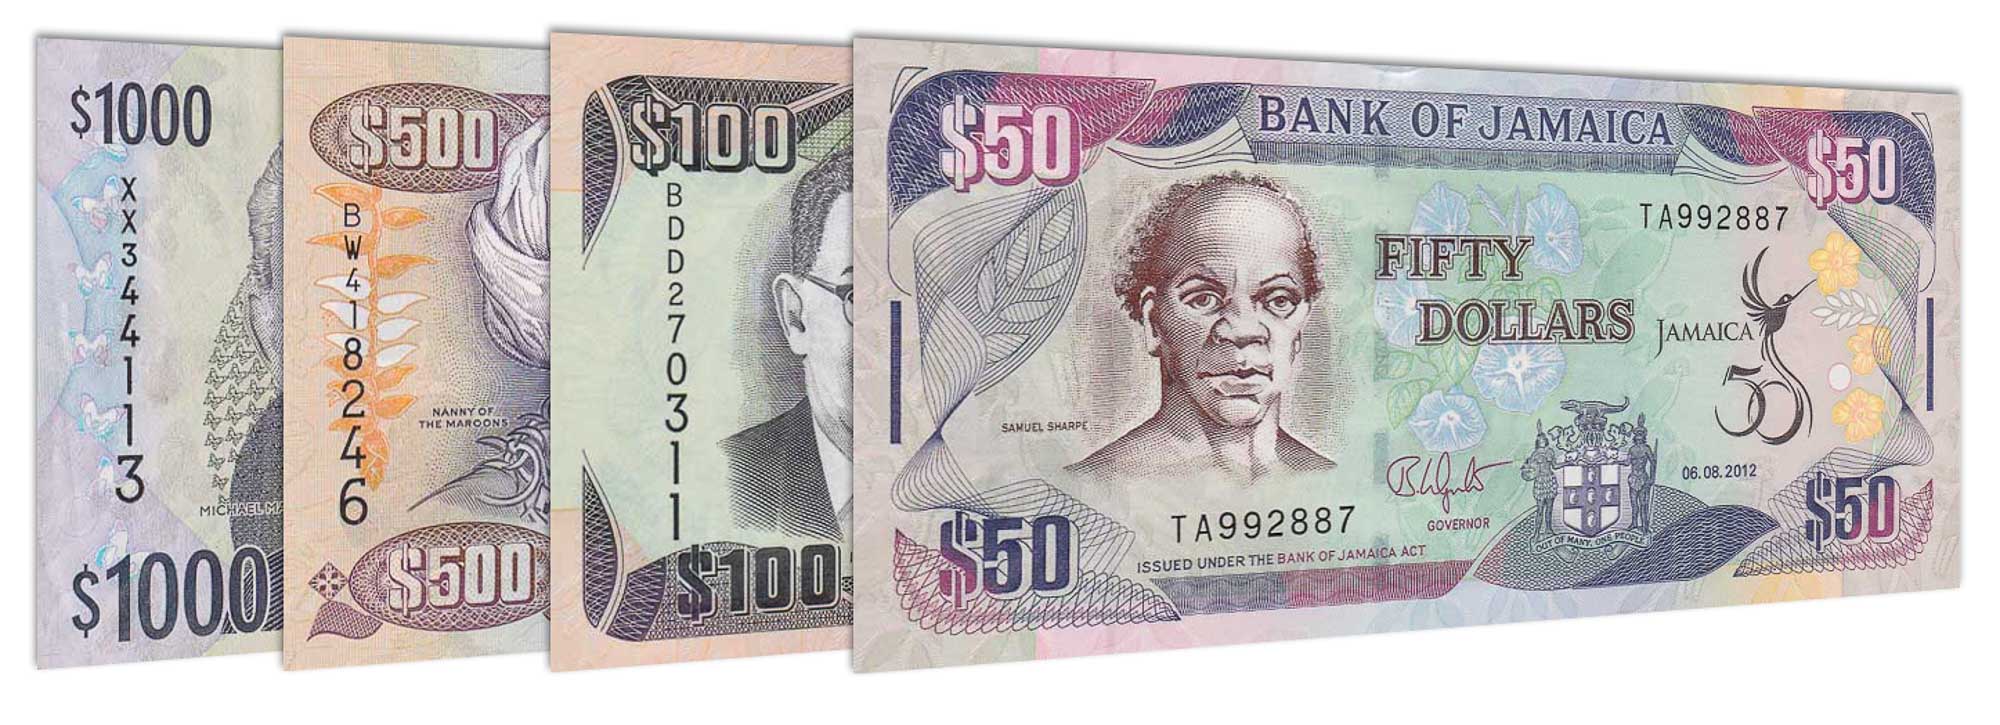 USD to JMD  Convert US Dollar to Jamaican Dollar